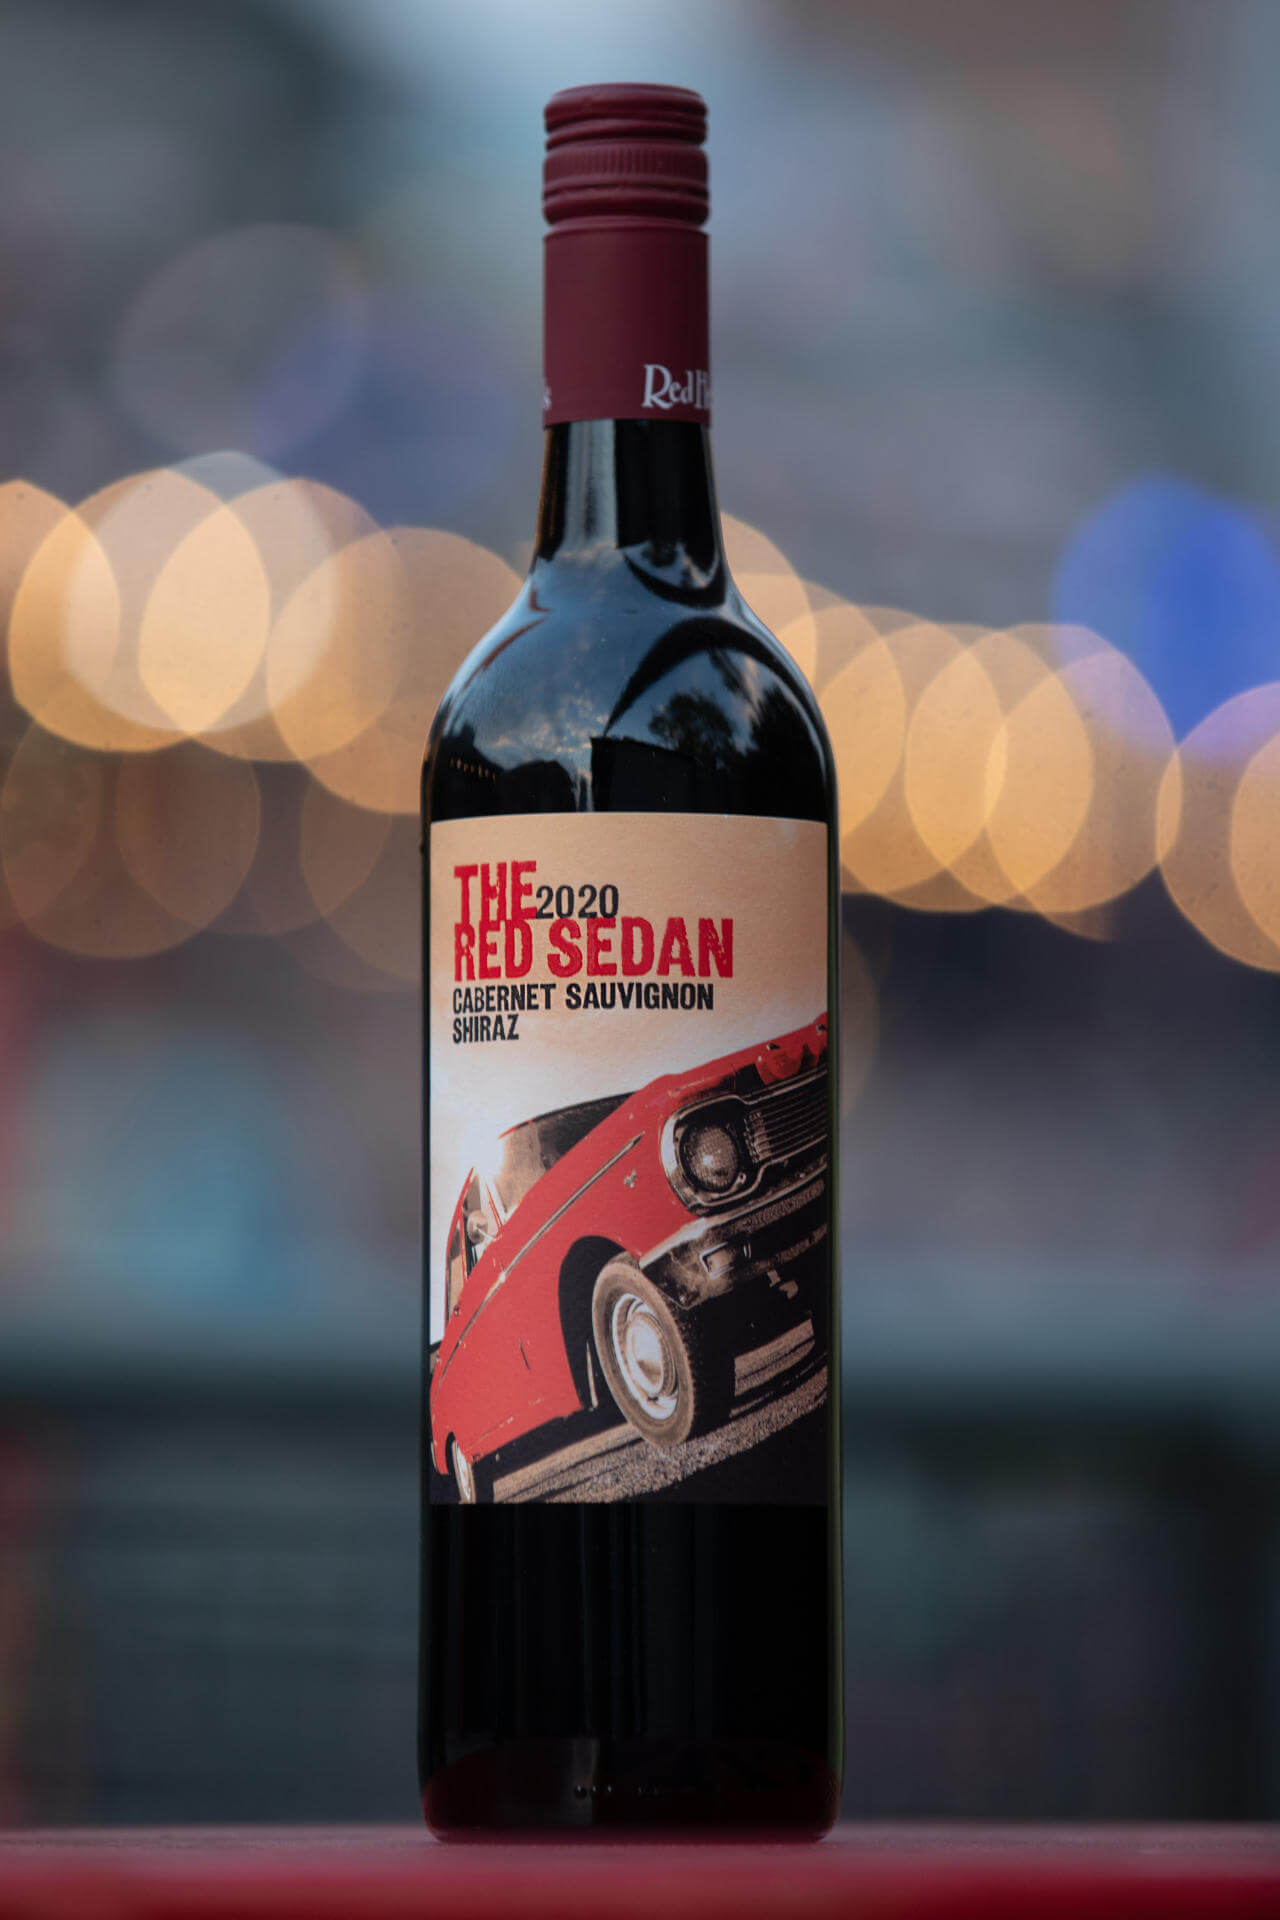 Enjoy The Red Sedan wine as a gift